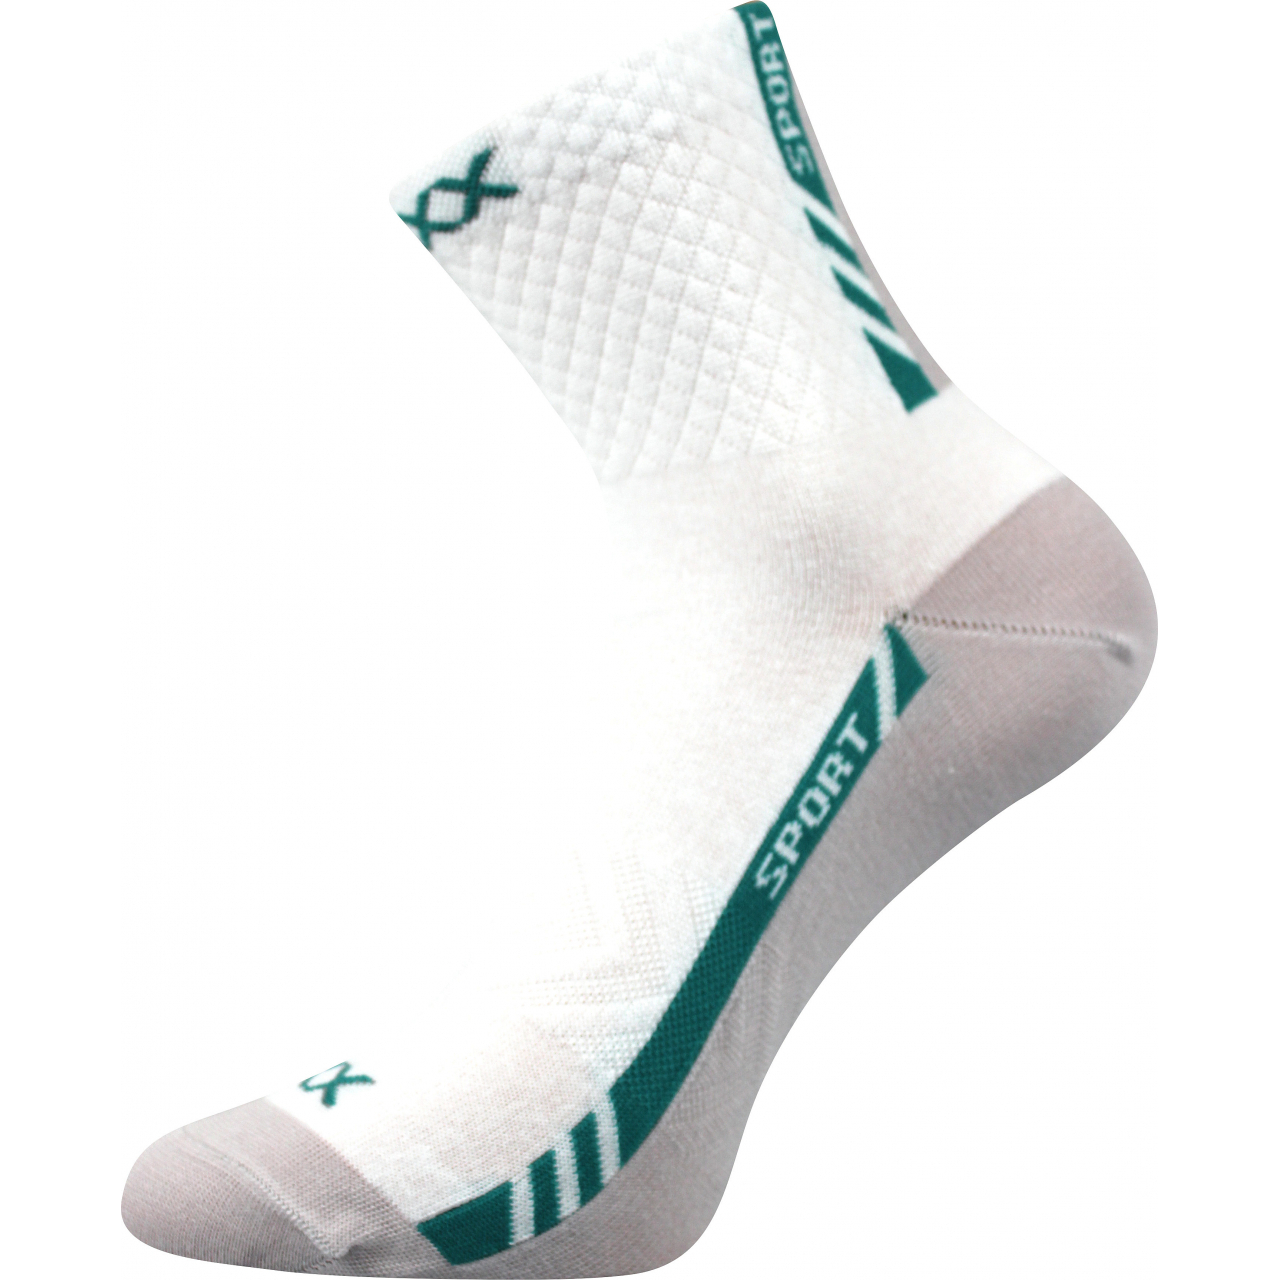 Ponožky sportovní Voxx Pius - bílé-šedé, 35-38